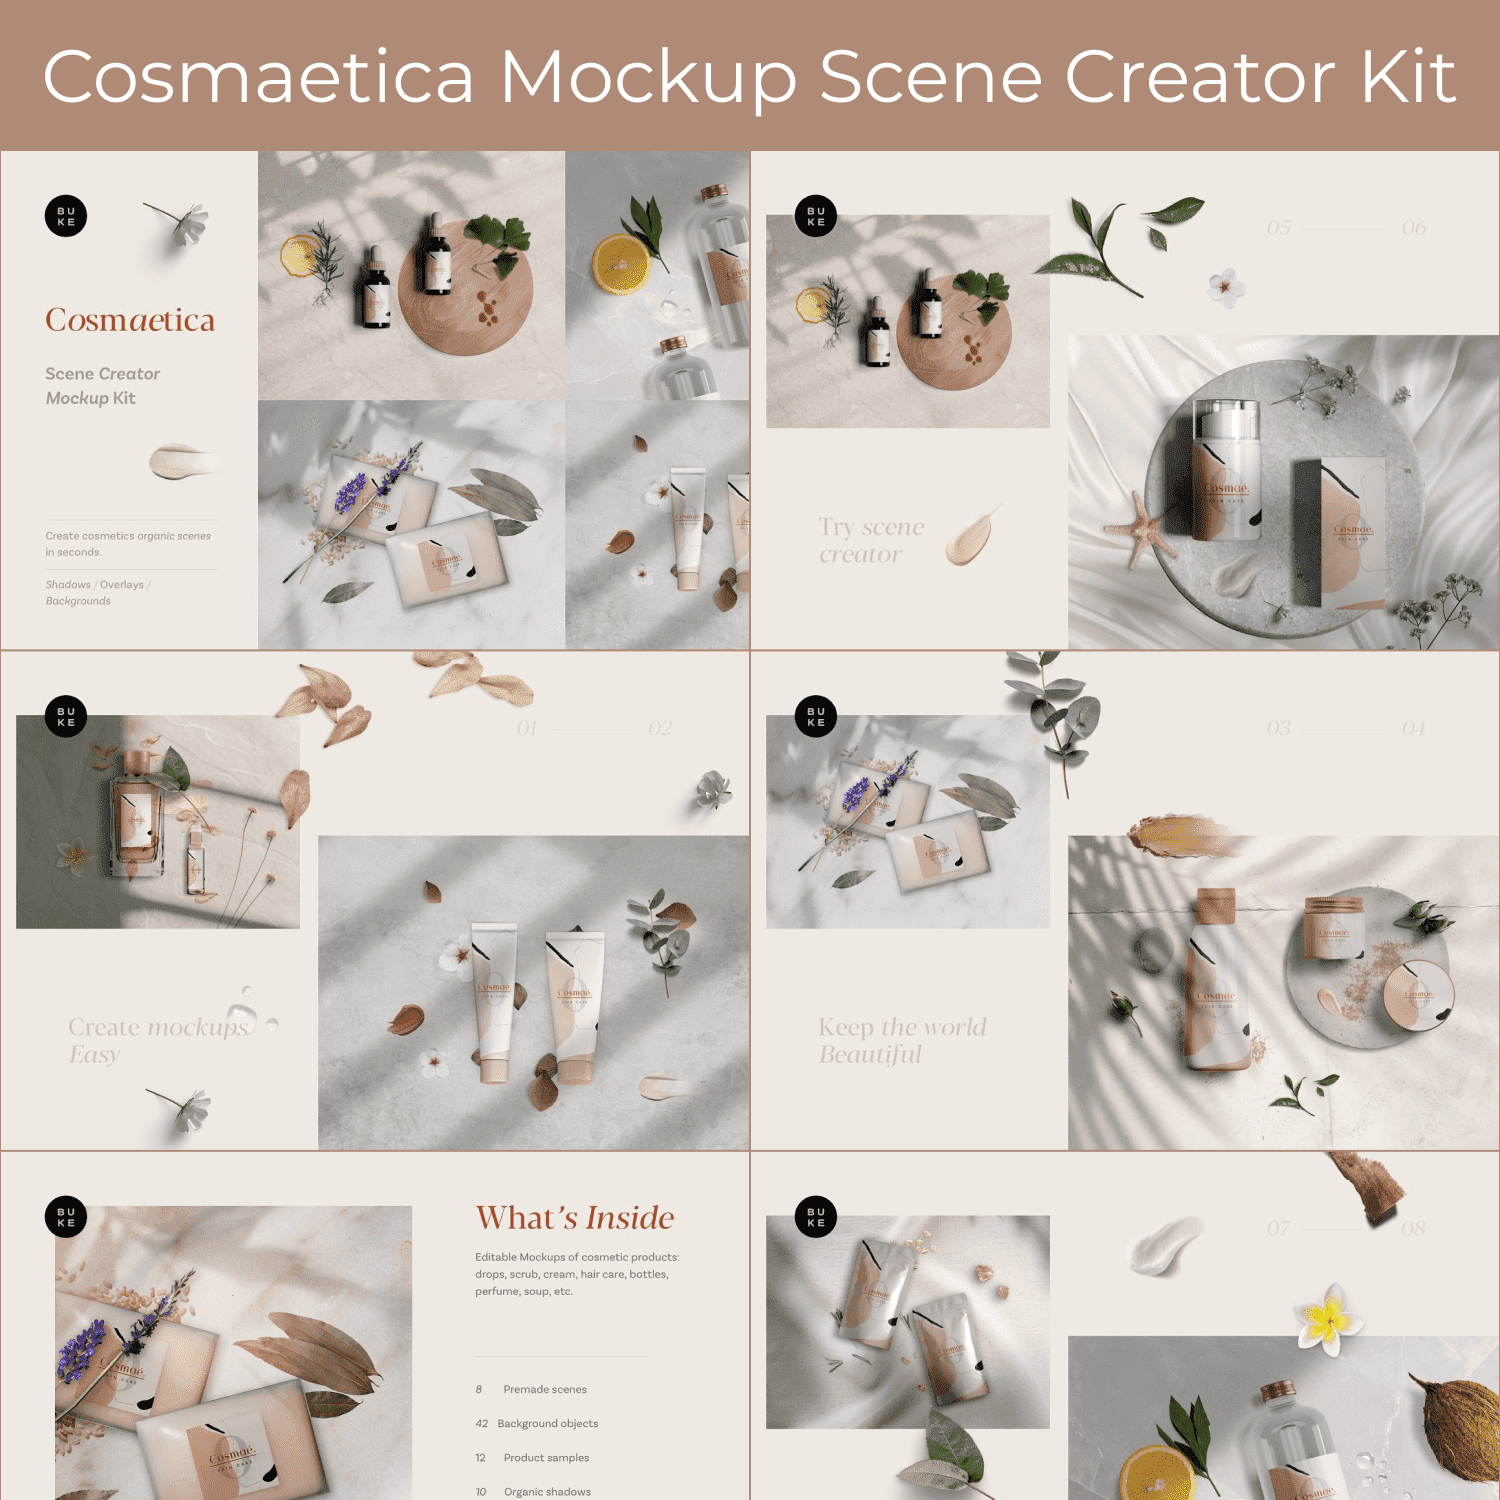 Cosmaetica Mockup Scene Creator Kit - "Try Scene Creator".